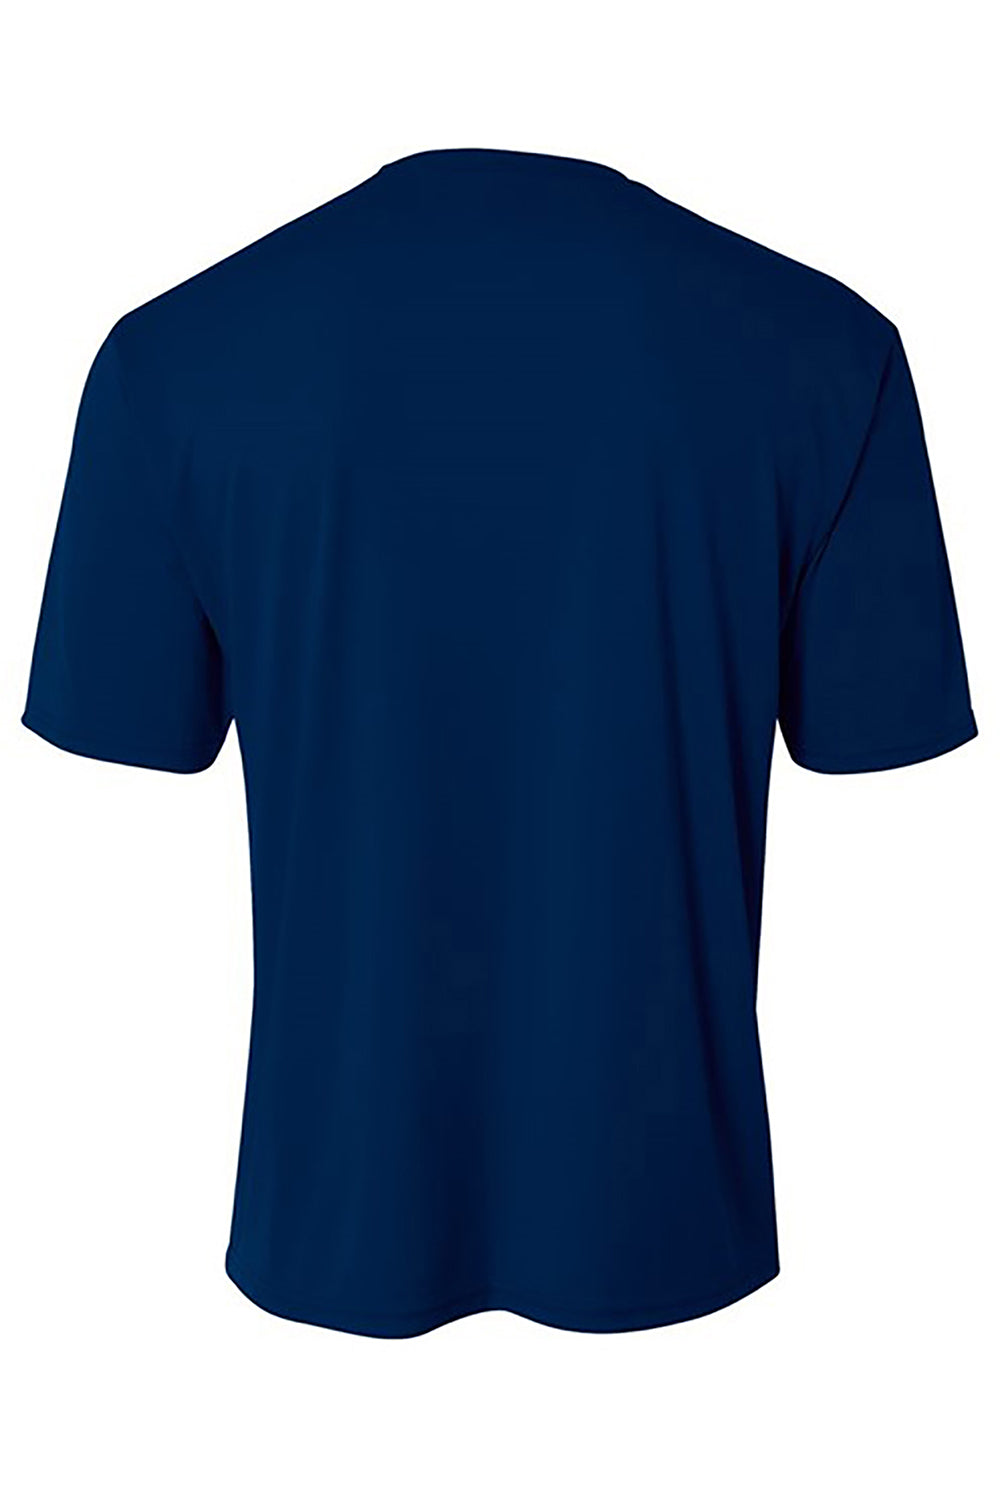 A4 N3402 Mens Sprint Performance Moisture Wicking Short Sleeve Crewneck T-Shirt Navy Blue Flat Back